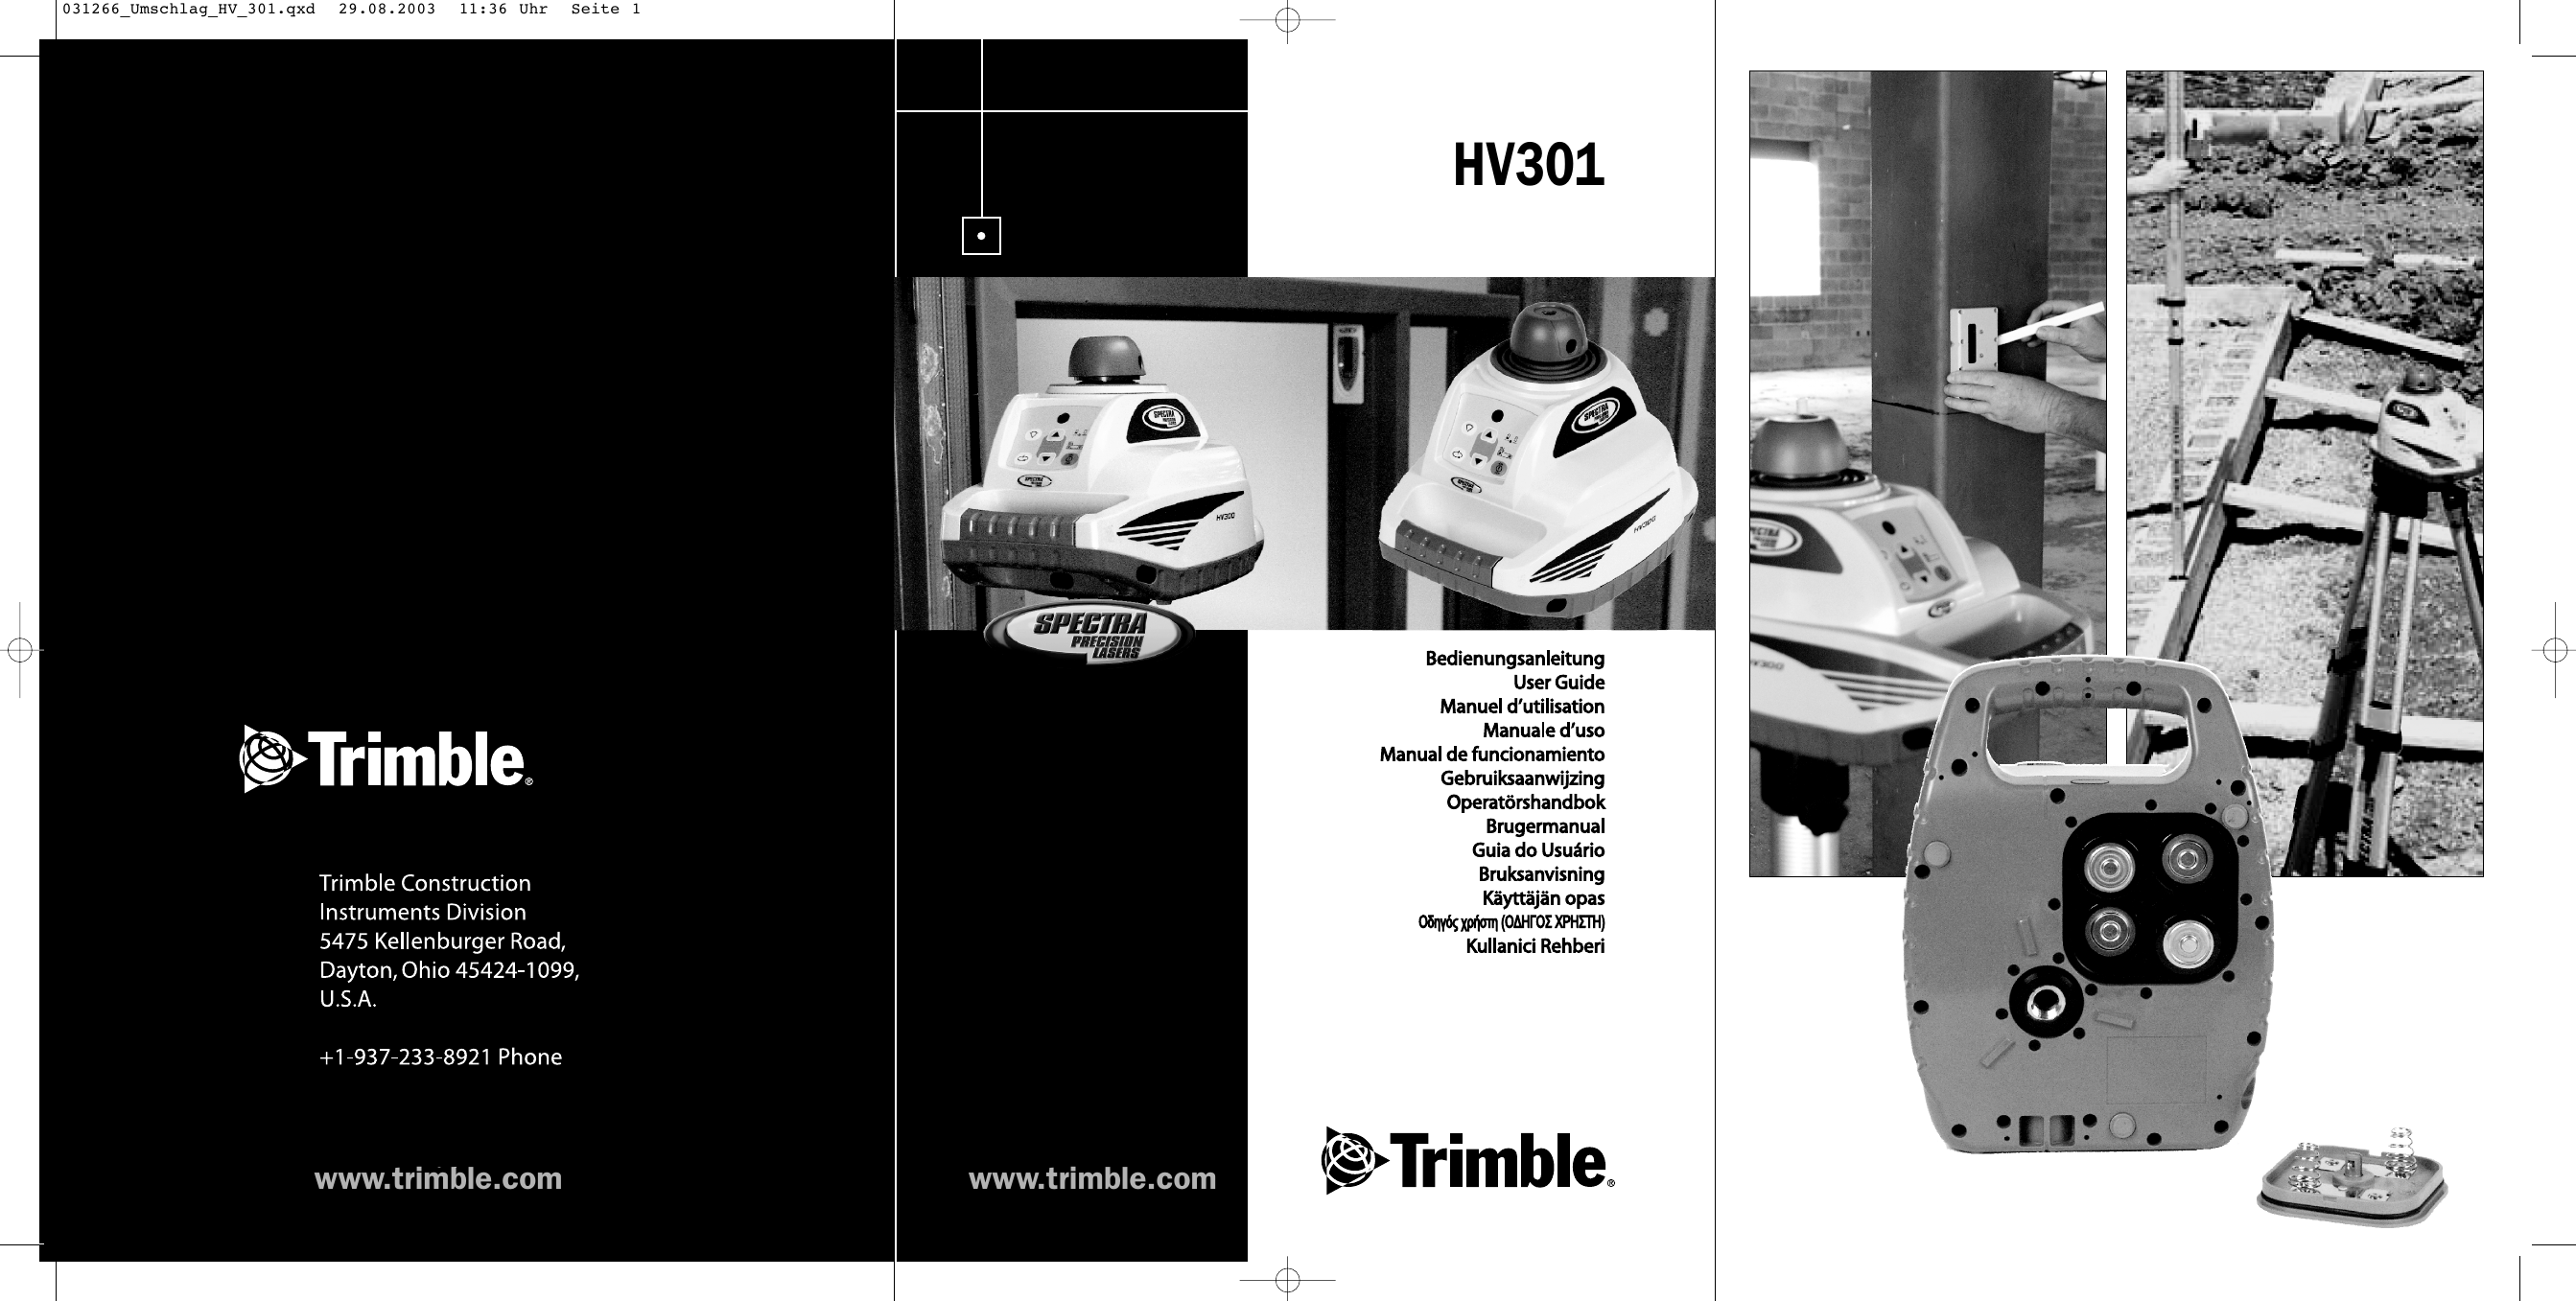 Trimble Outdoors Hv301 Users Manual